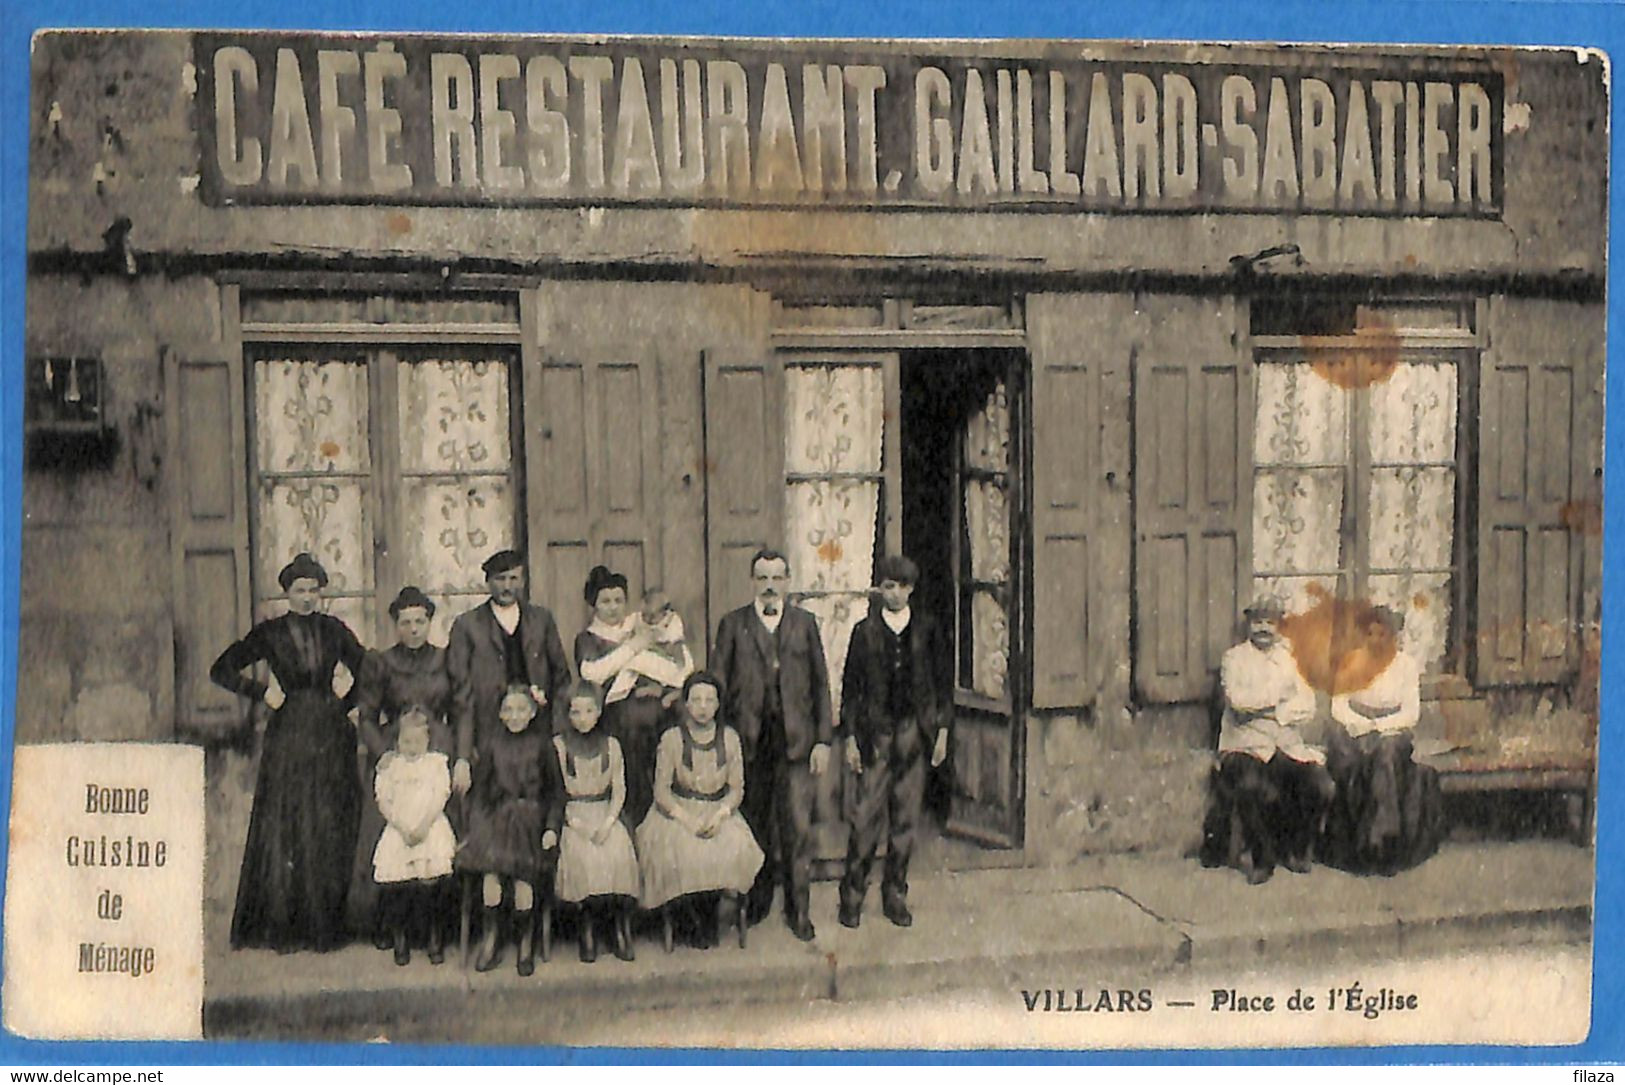 01 - Ain - Villars - Place De L'Eglise - Cafe Restaurant Gaillard Sabatier    (N6340) - Villars-les-Dombes